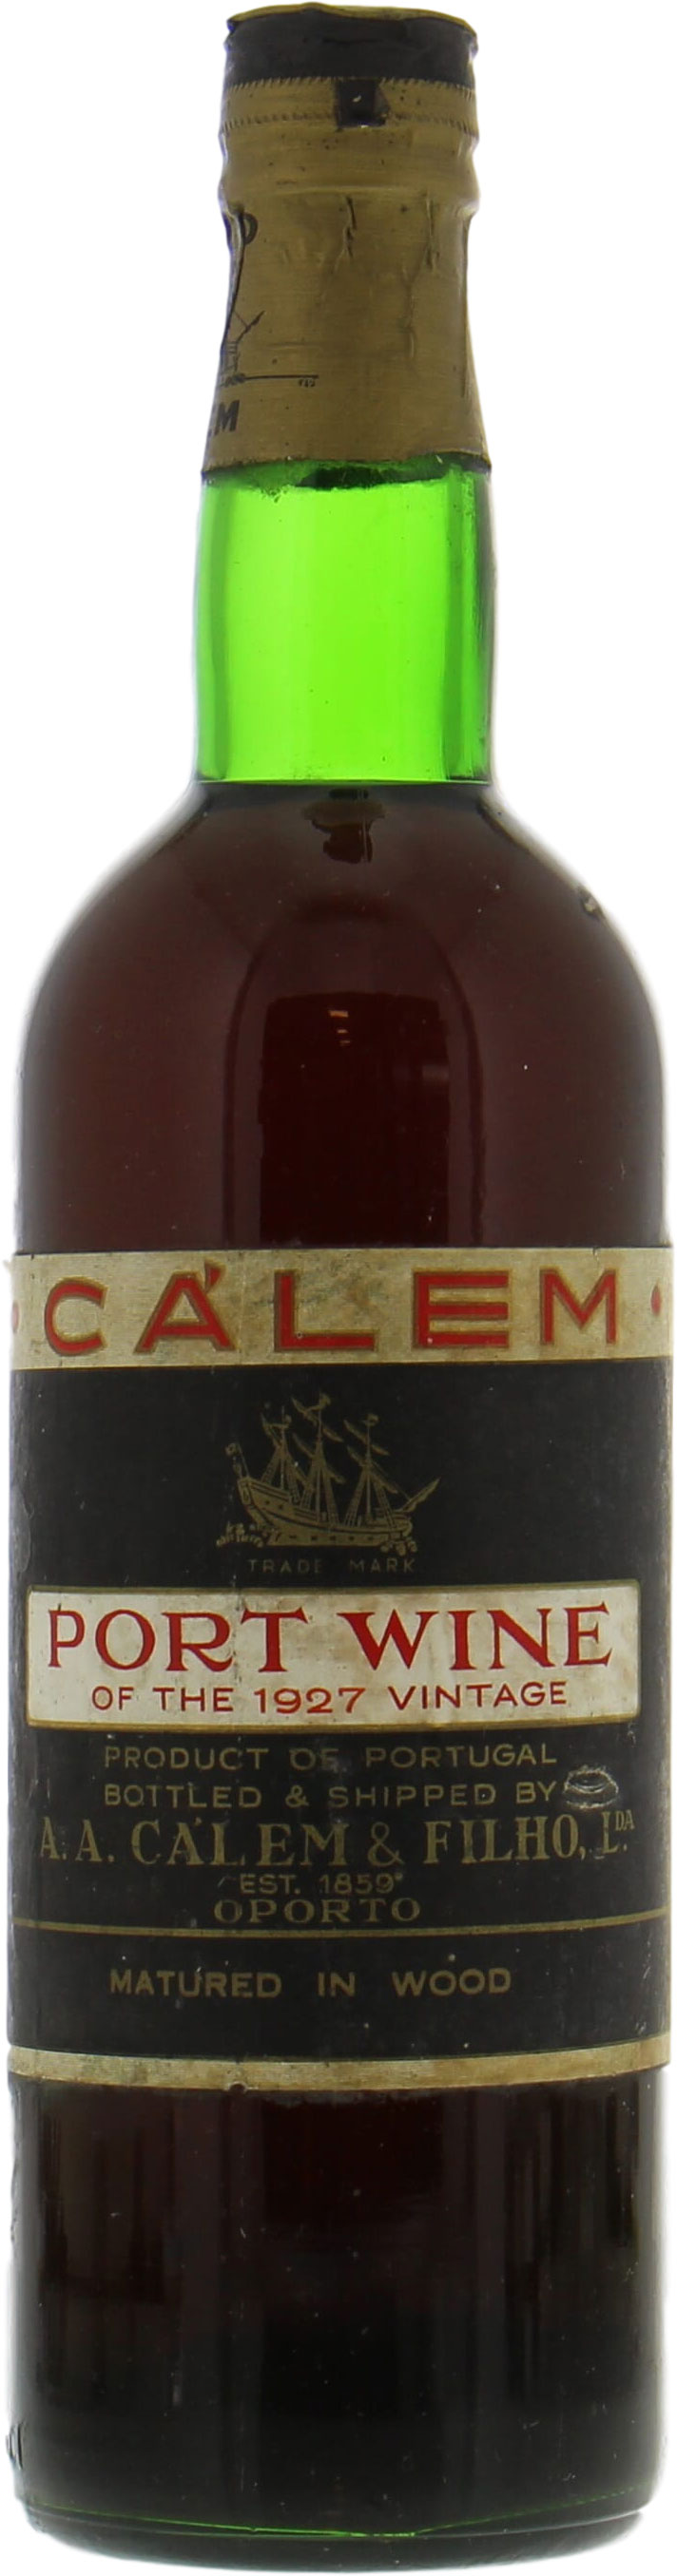 Calem - Vintage port 1927 Perfect